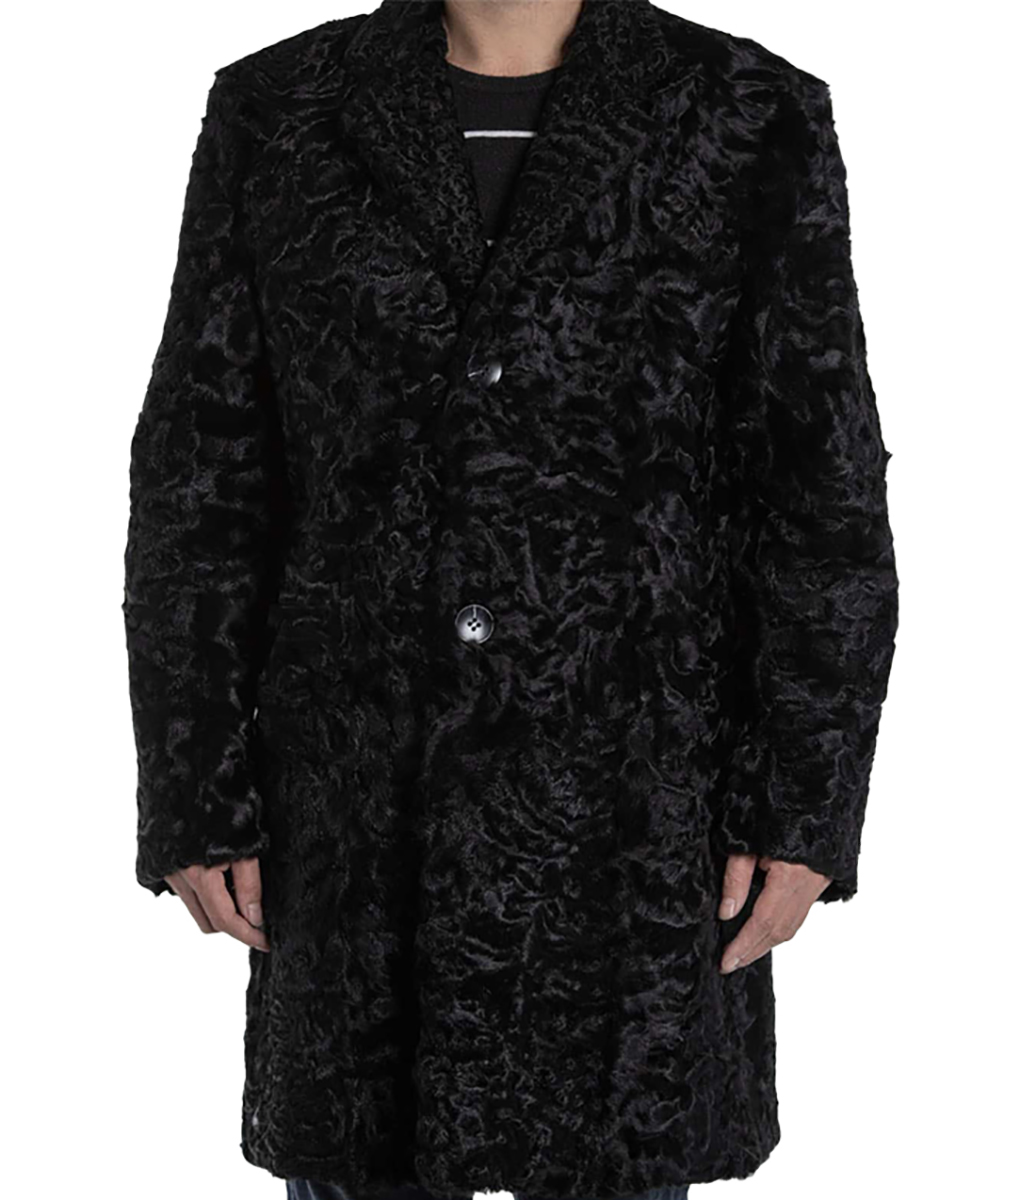 Men's Stylish Mid-Length Black Persian Lamb Fur Coat